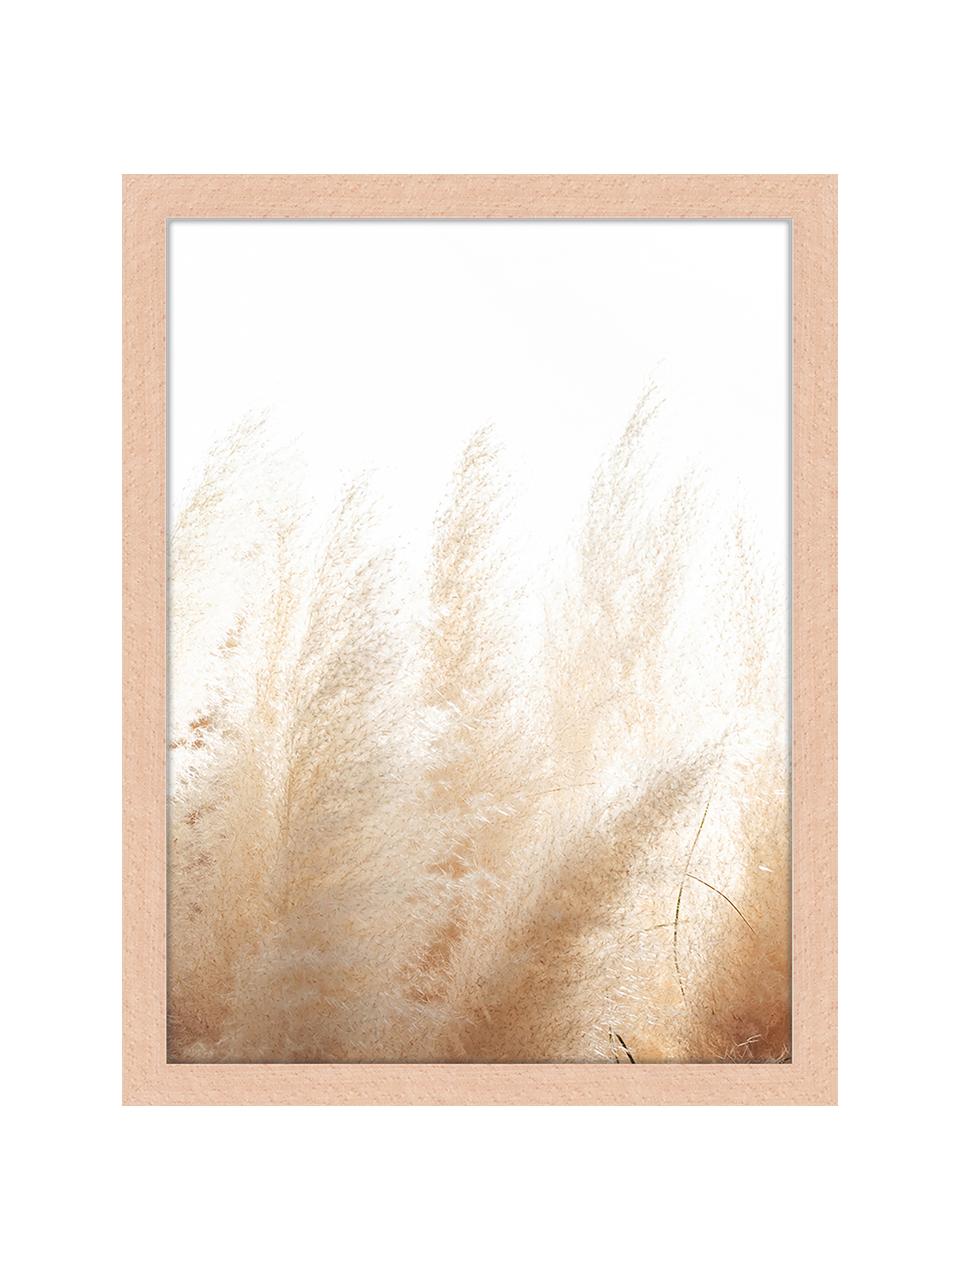 Impresión digital enmarcada Pampa Grass, Pampa Grass, An 33 x Al 43 cm